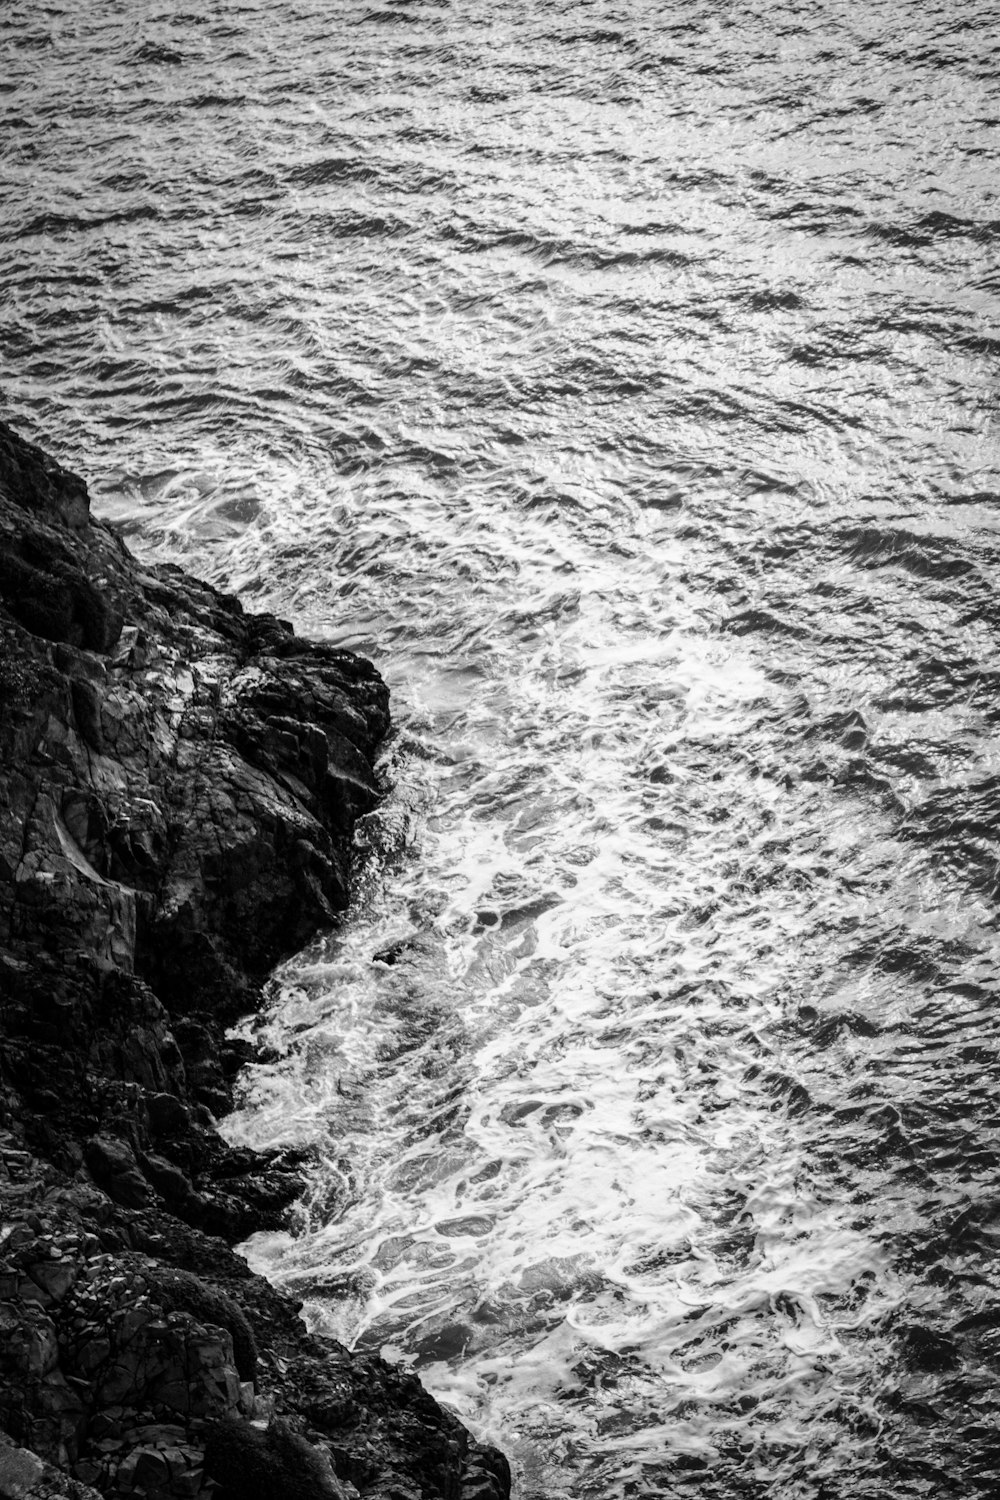 grayscale photo of ocean waves crashing on rock